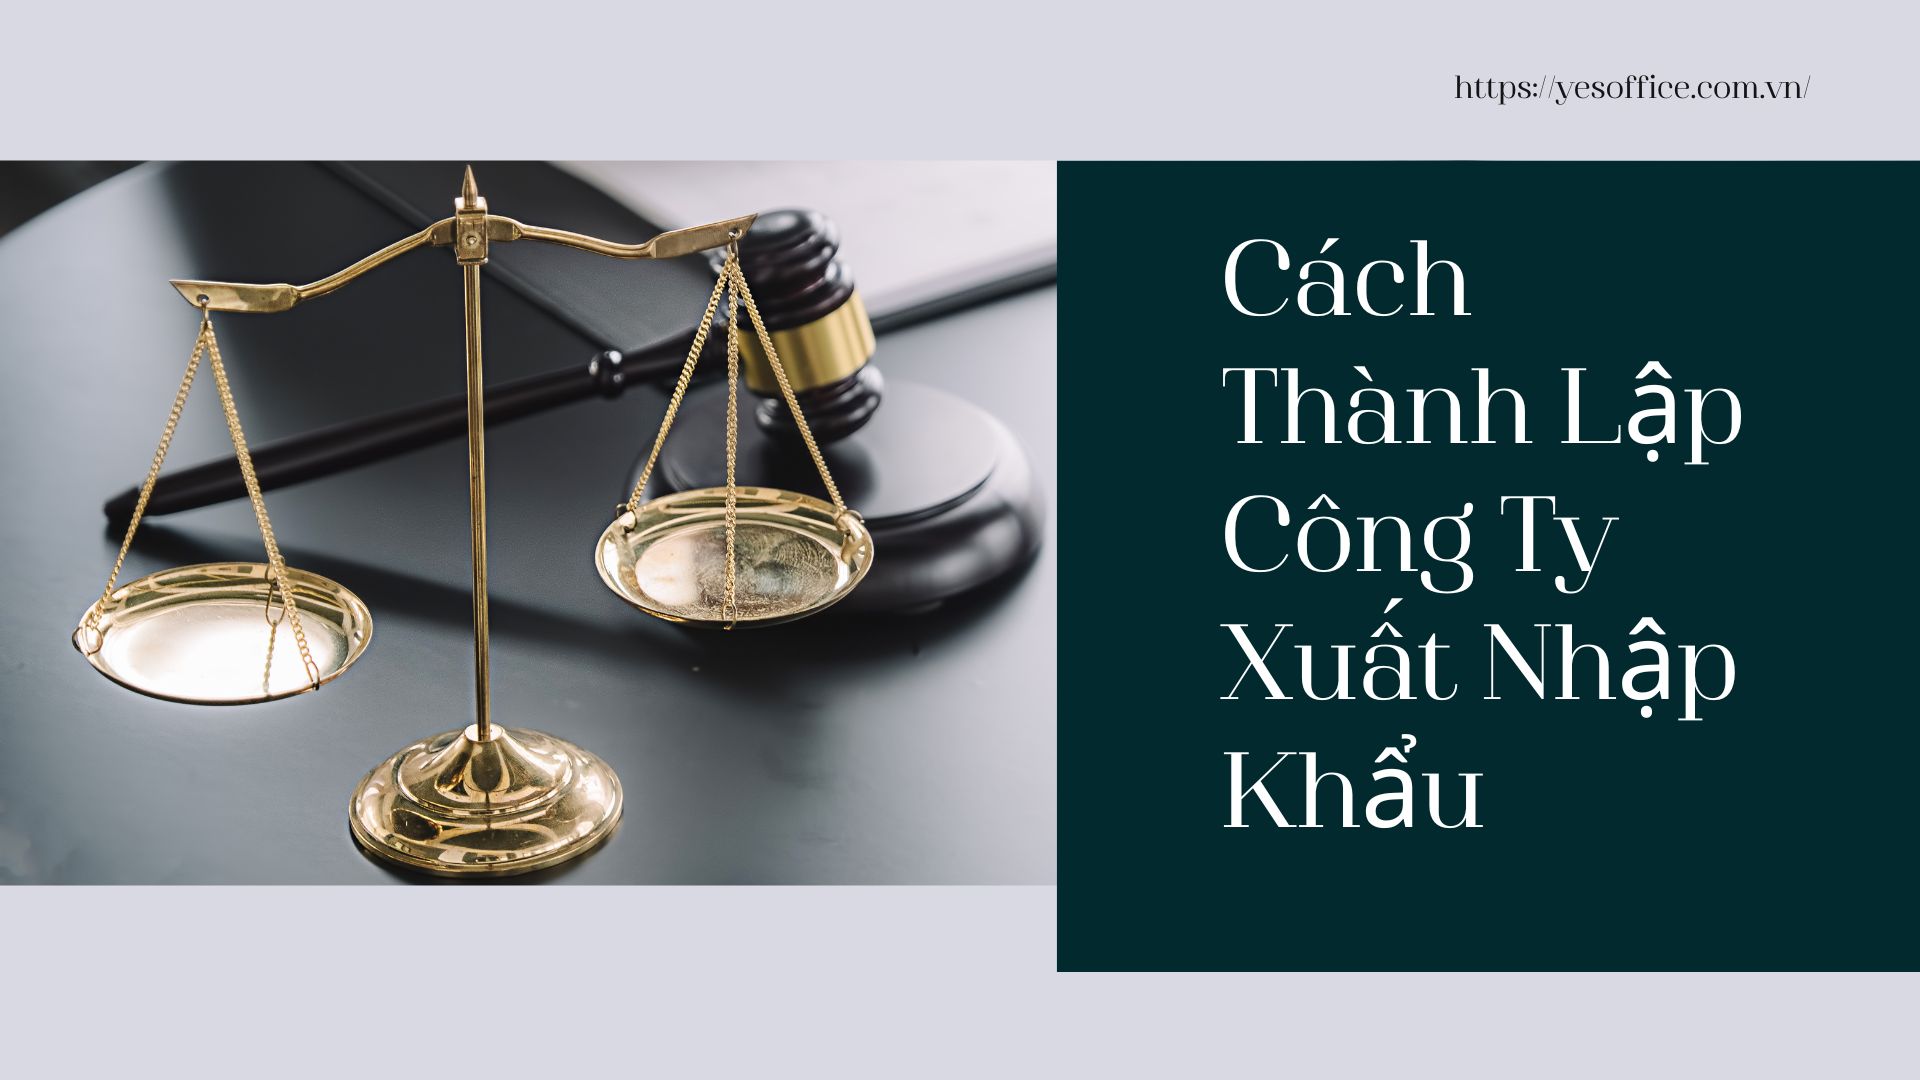 Cach Thanh Lap Cong Ty Xuat Nhap Khau